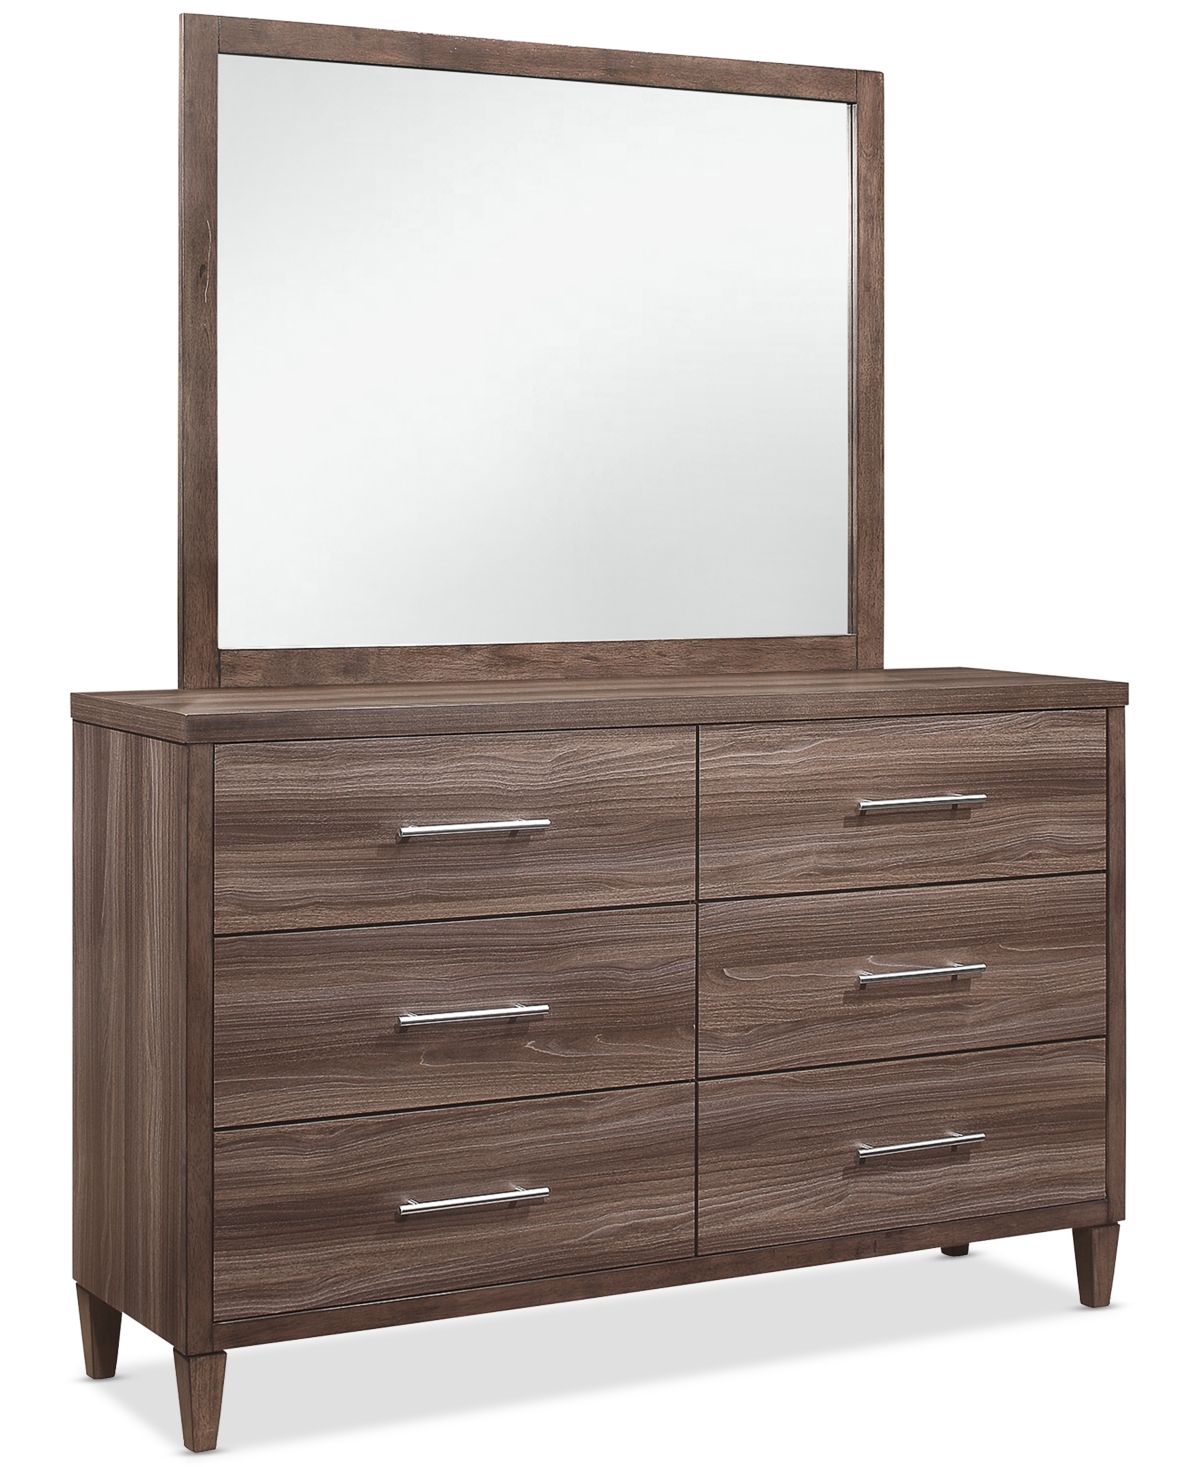 Furniture Jorah Laminate Dresser In Brown